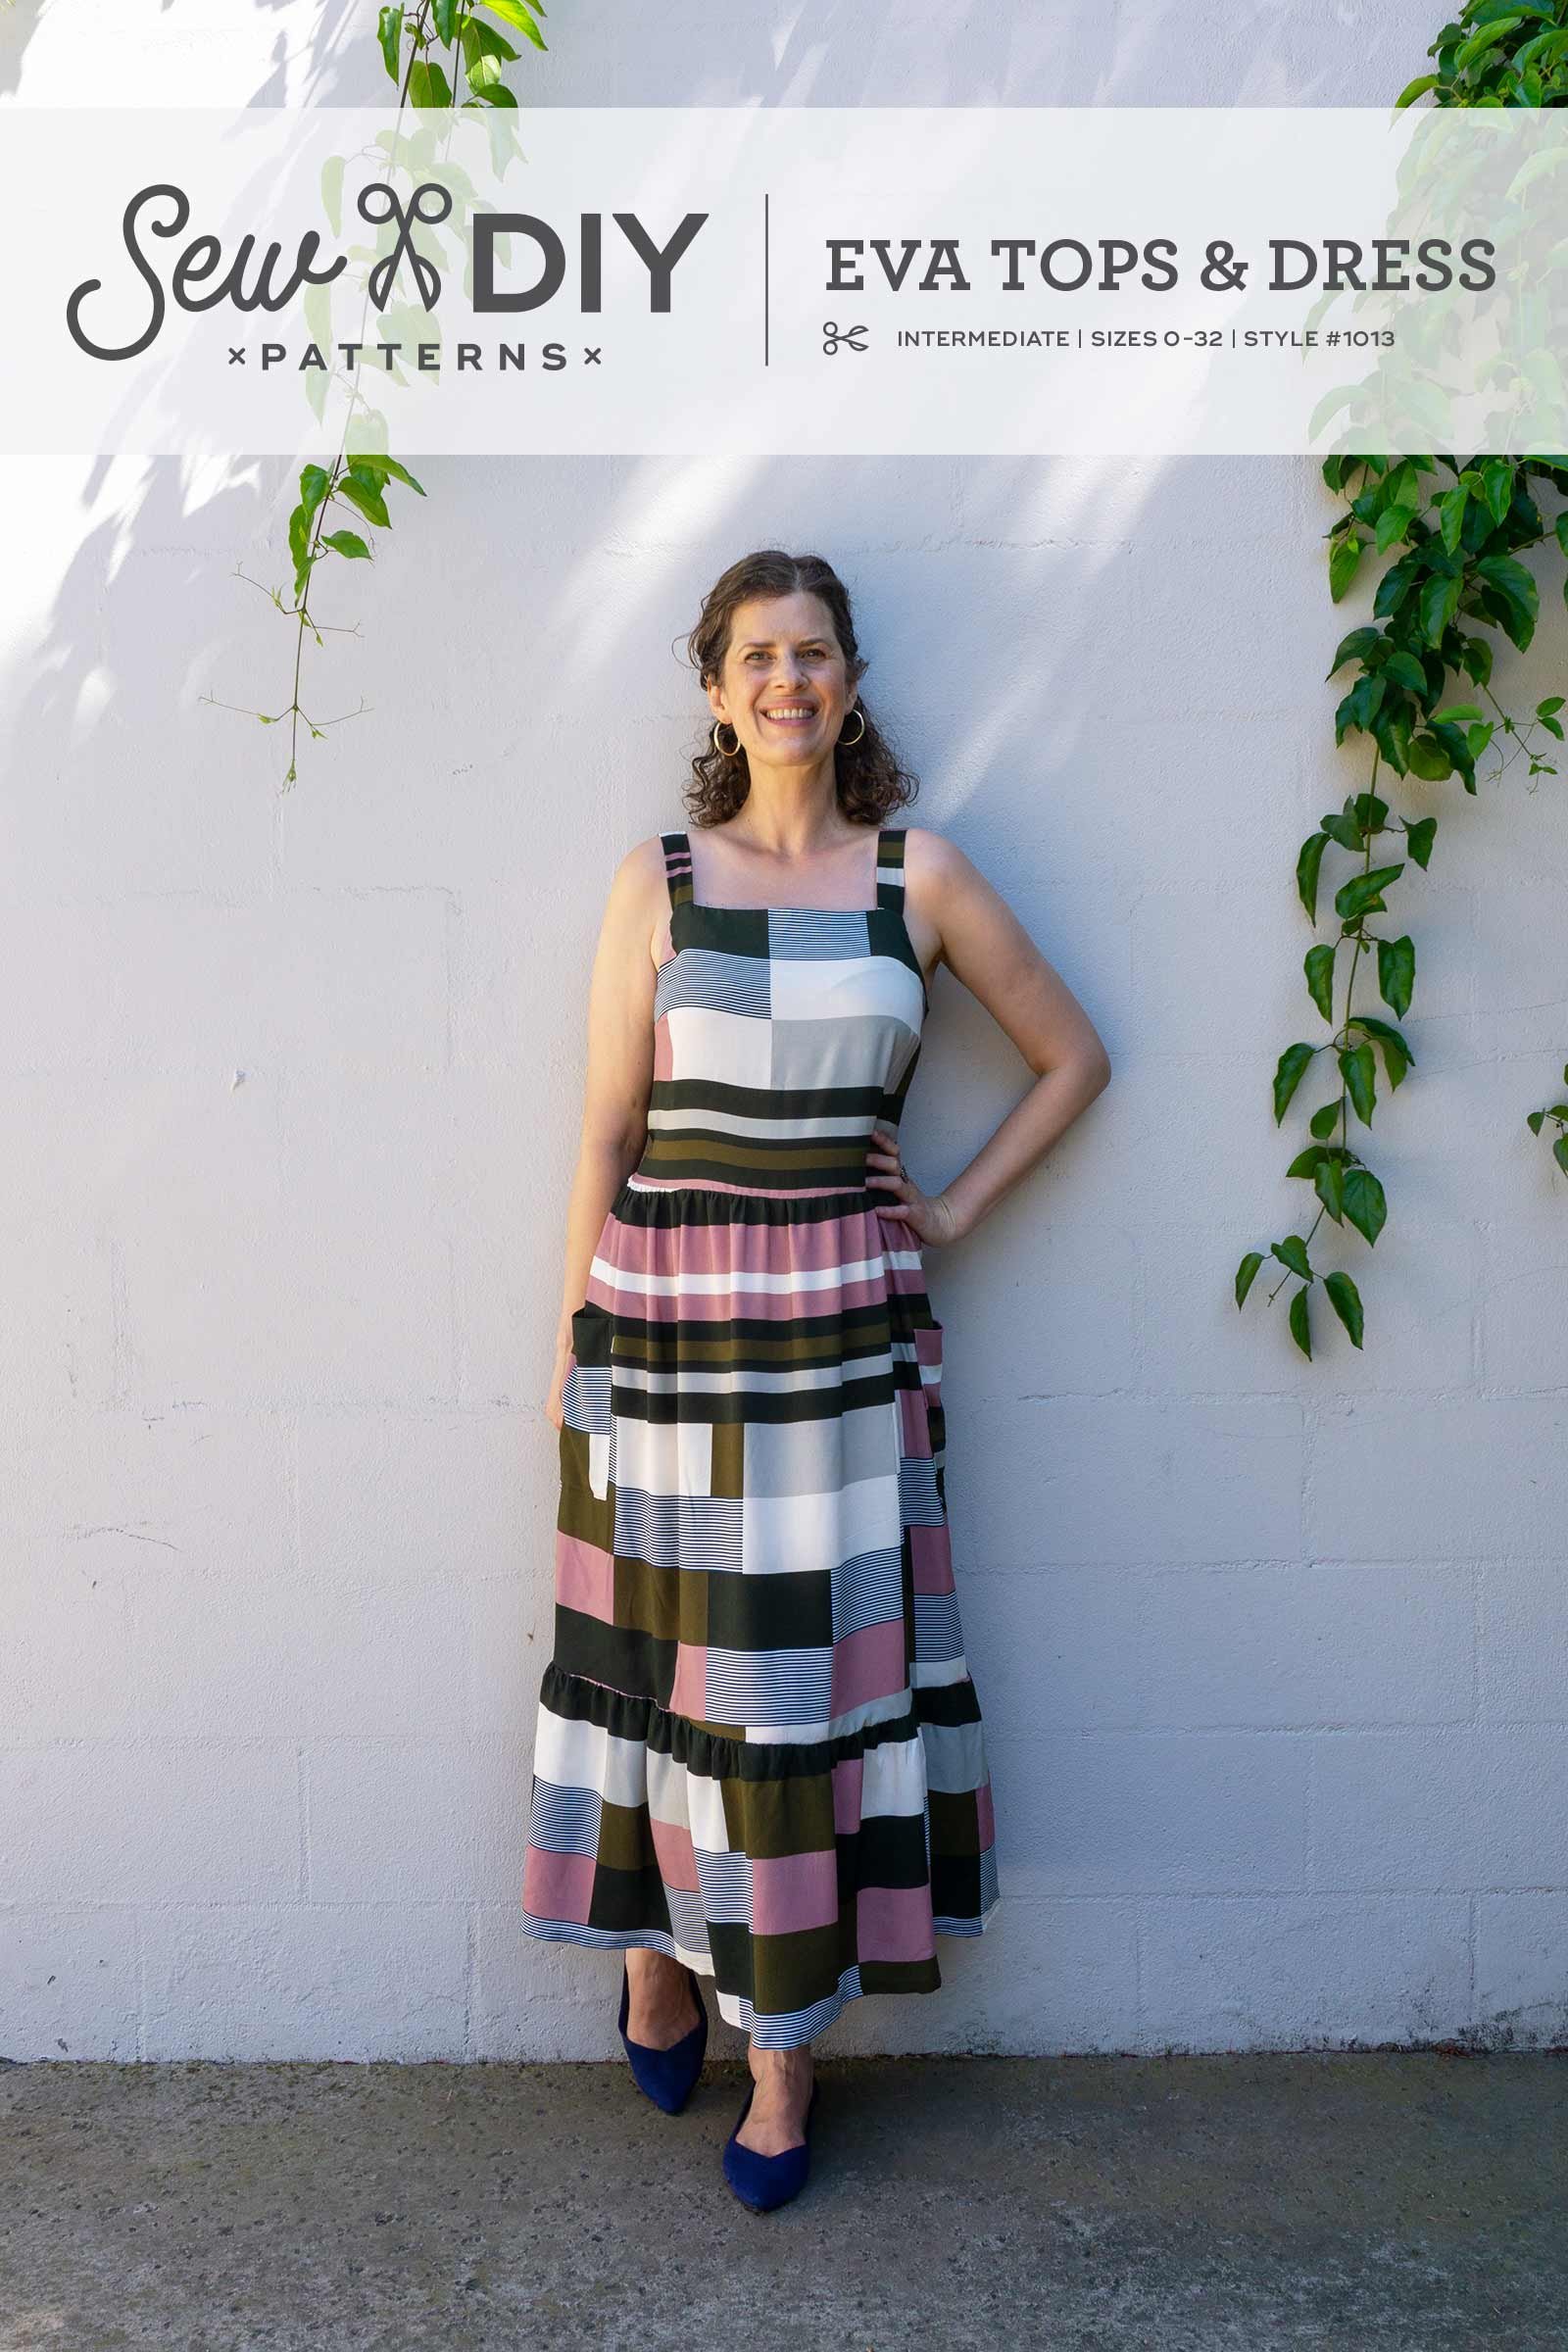 Pattern Roundup: Knit Wrap Dress Patterns - Threads